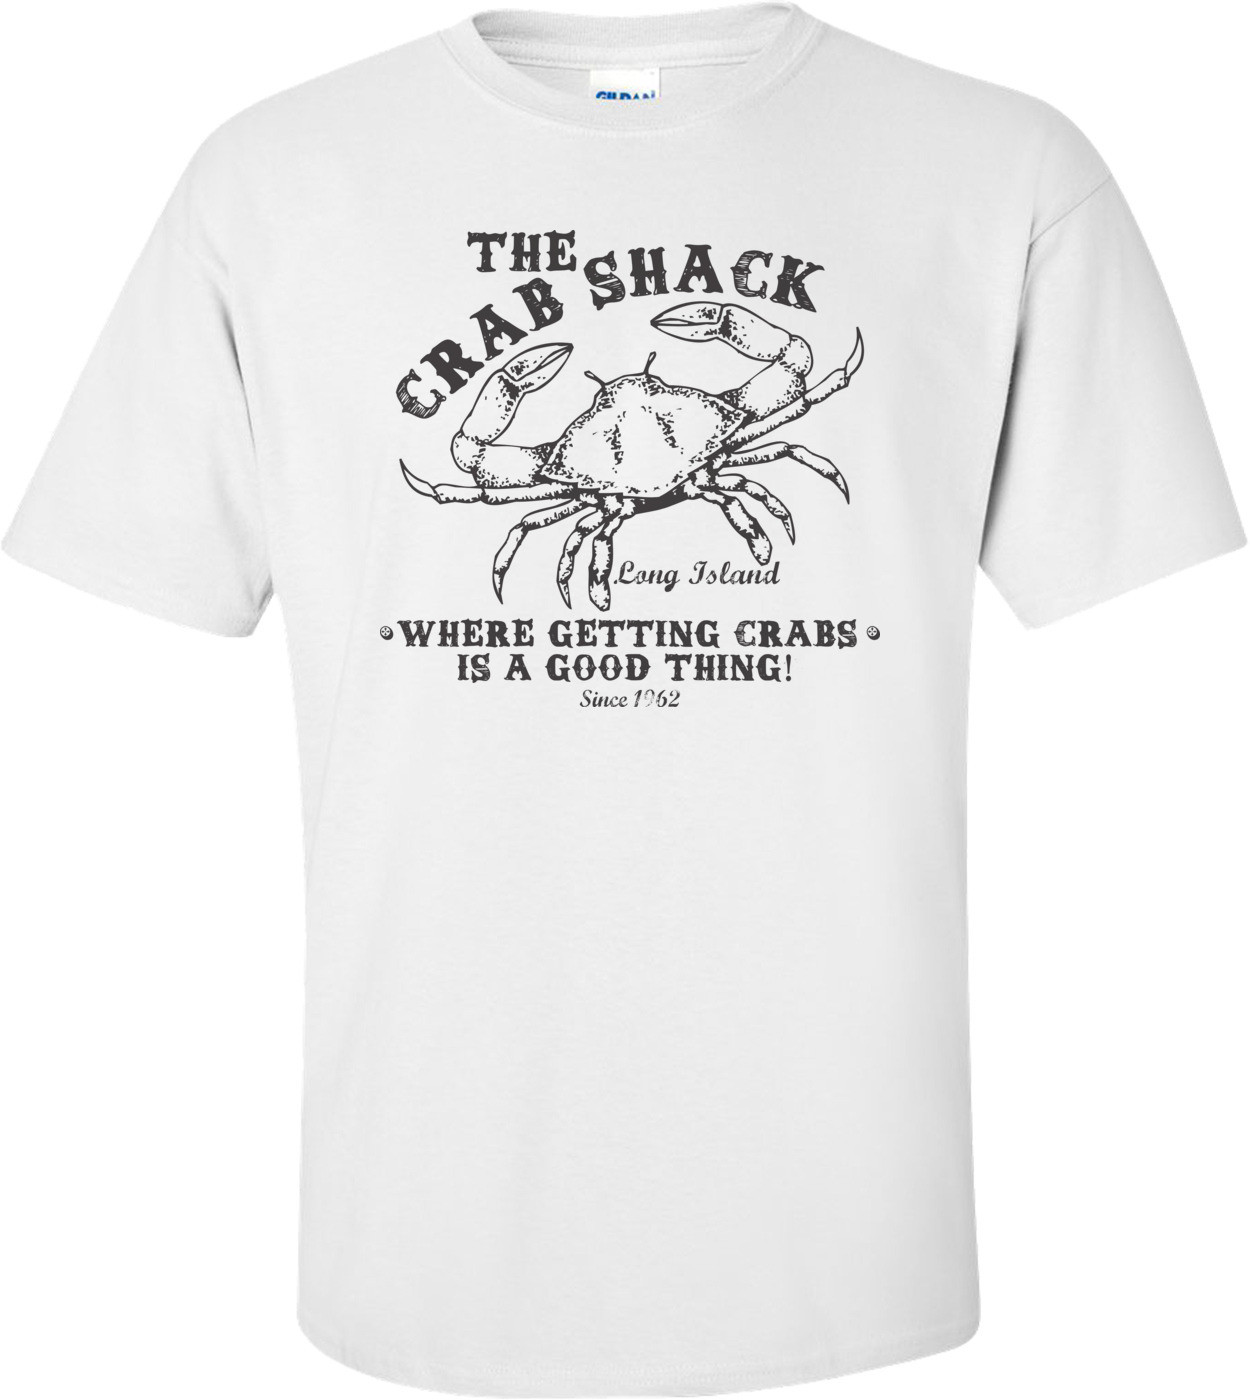 The Crab Shack T-shirt  